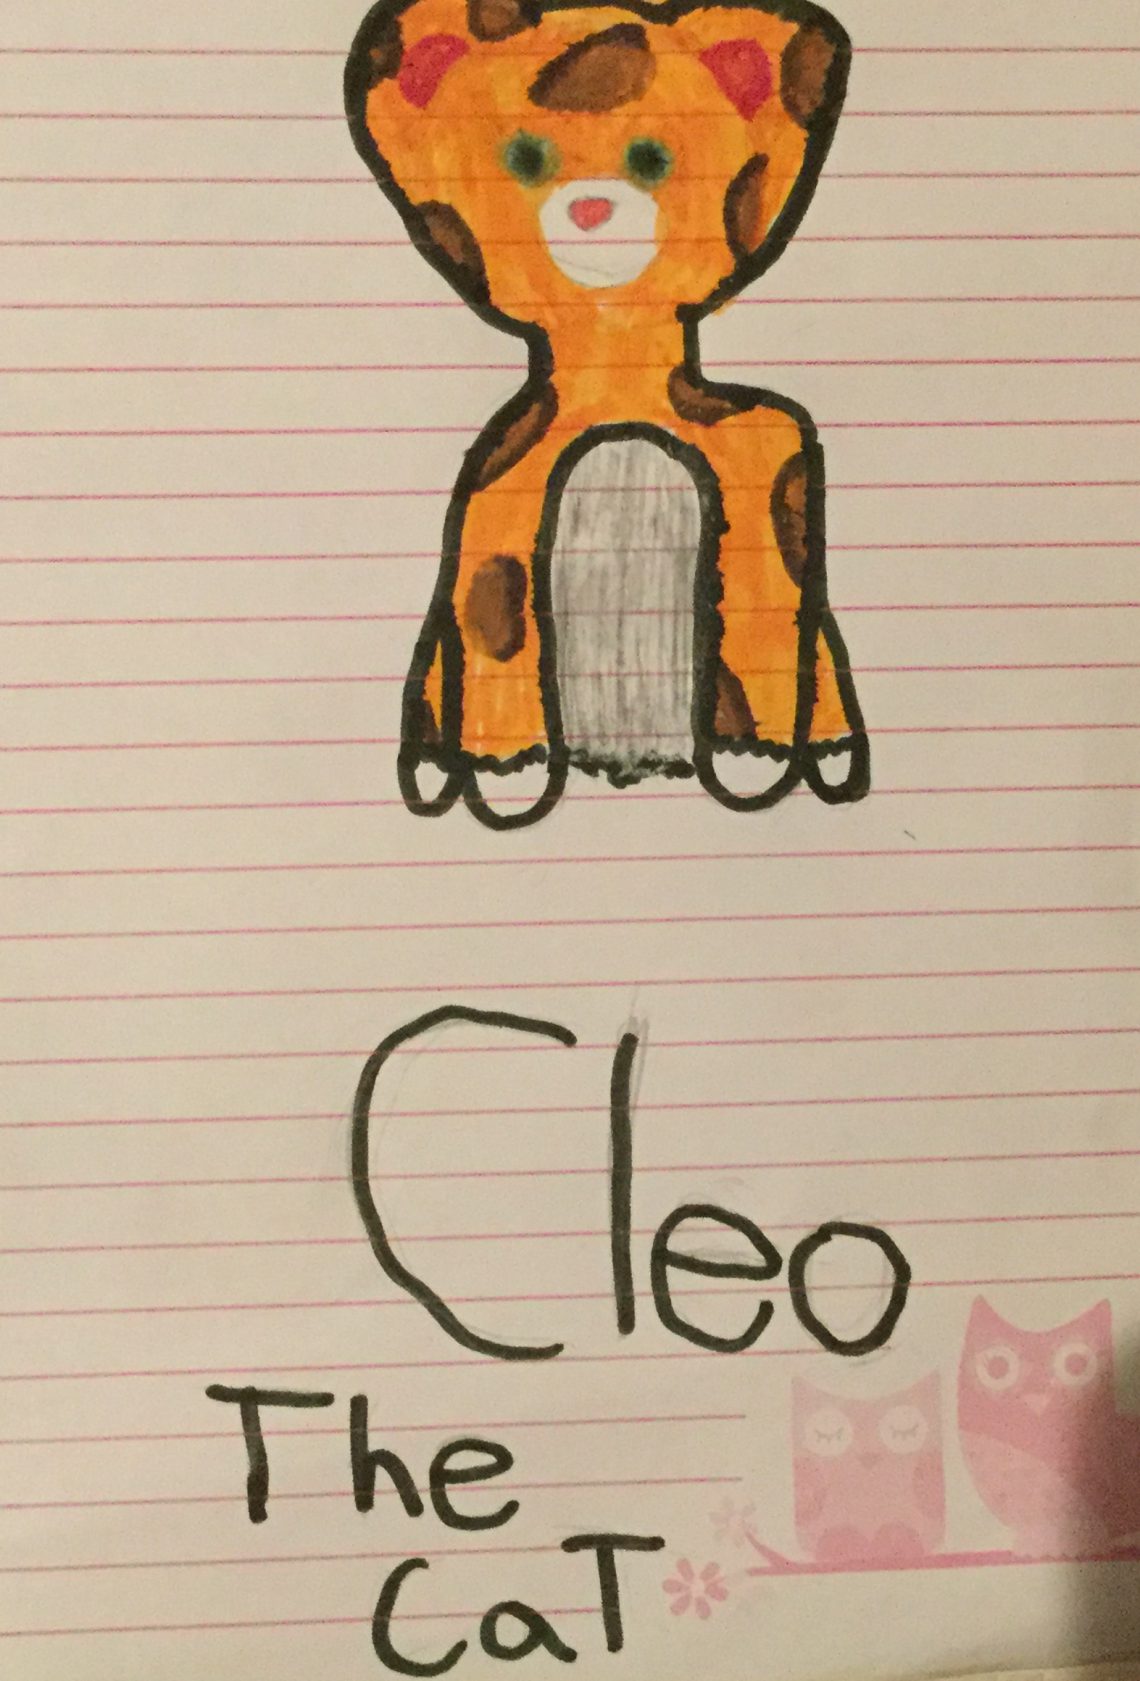 Cleo the cat